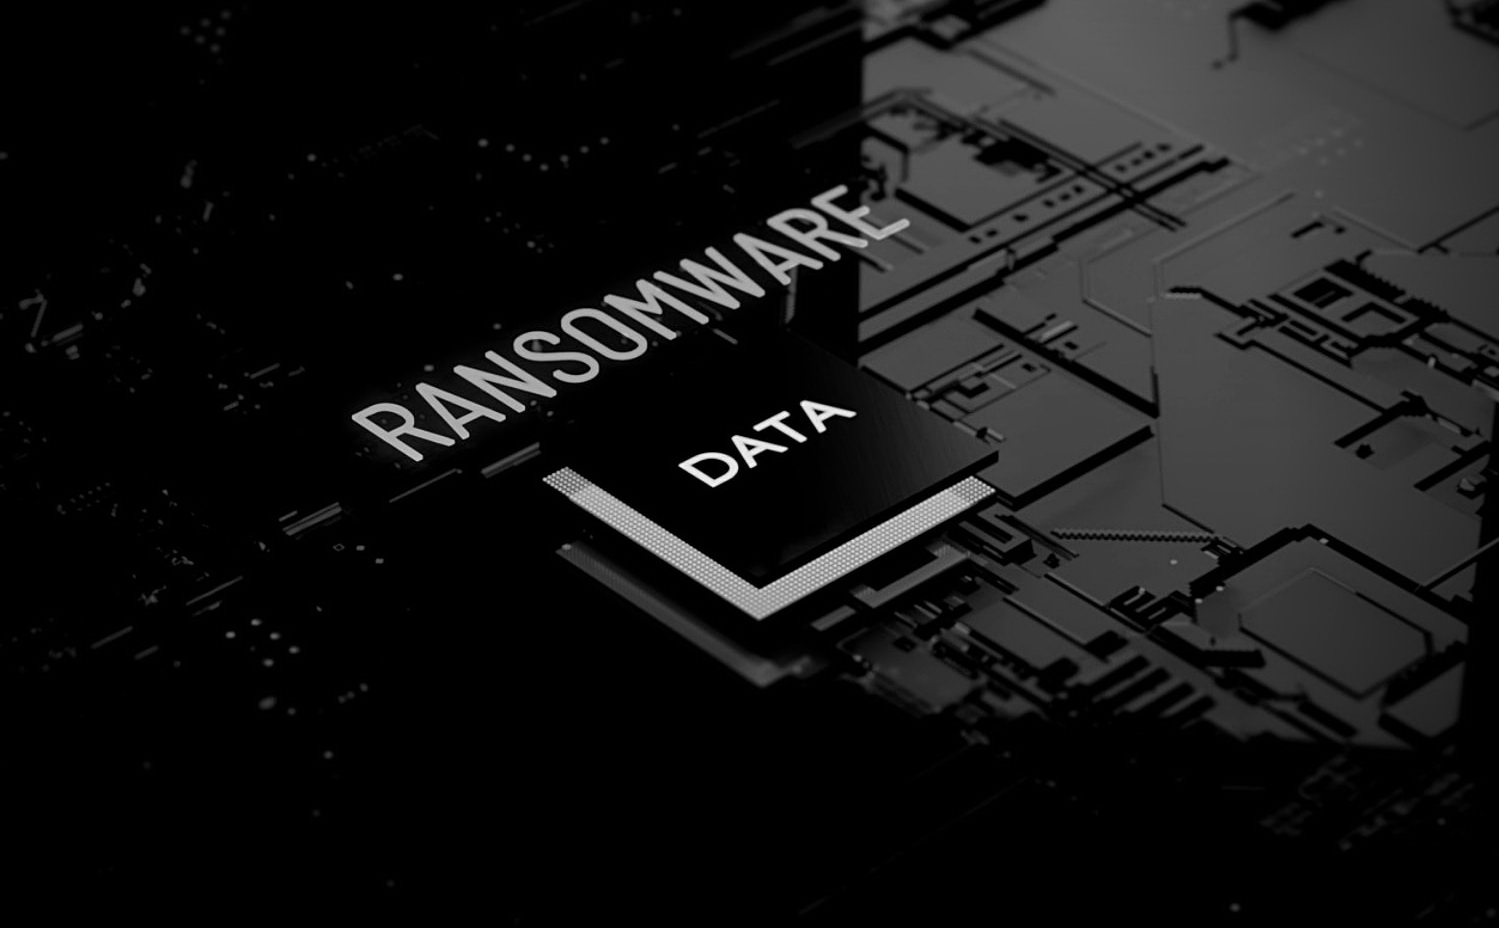 BlackMatter ransomware attacks